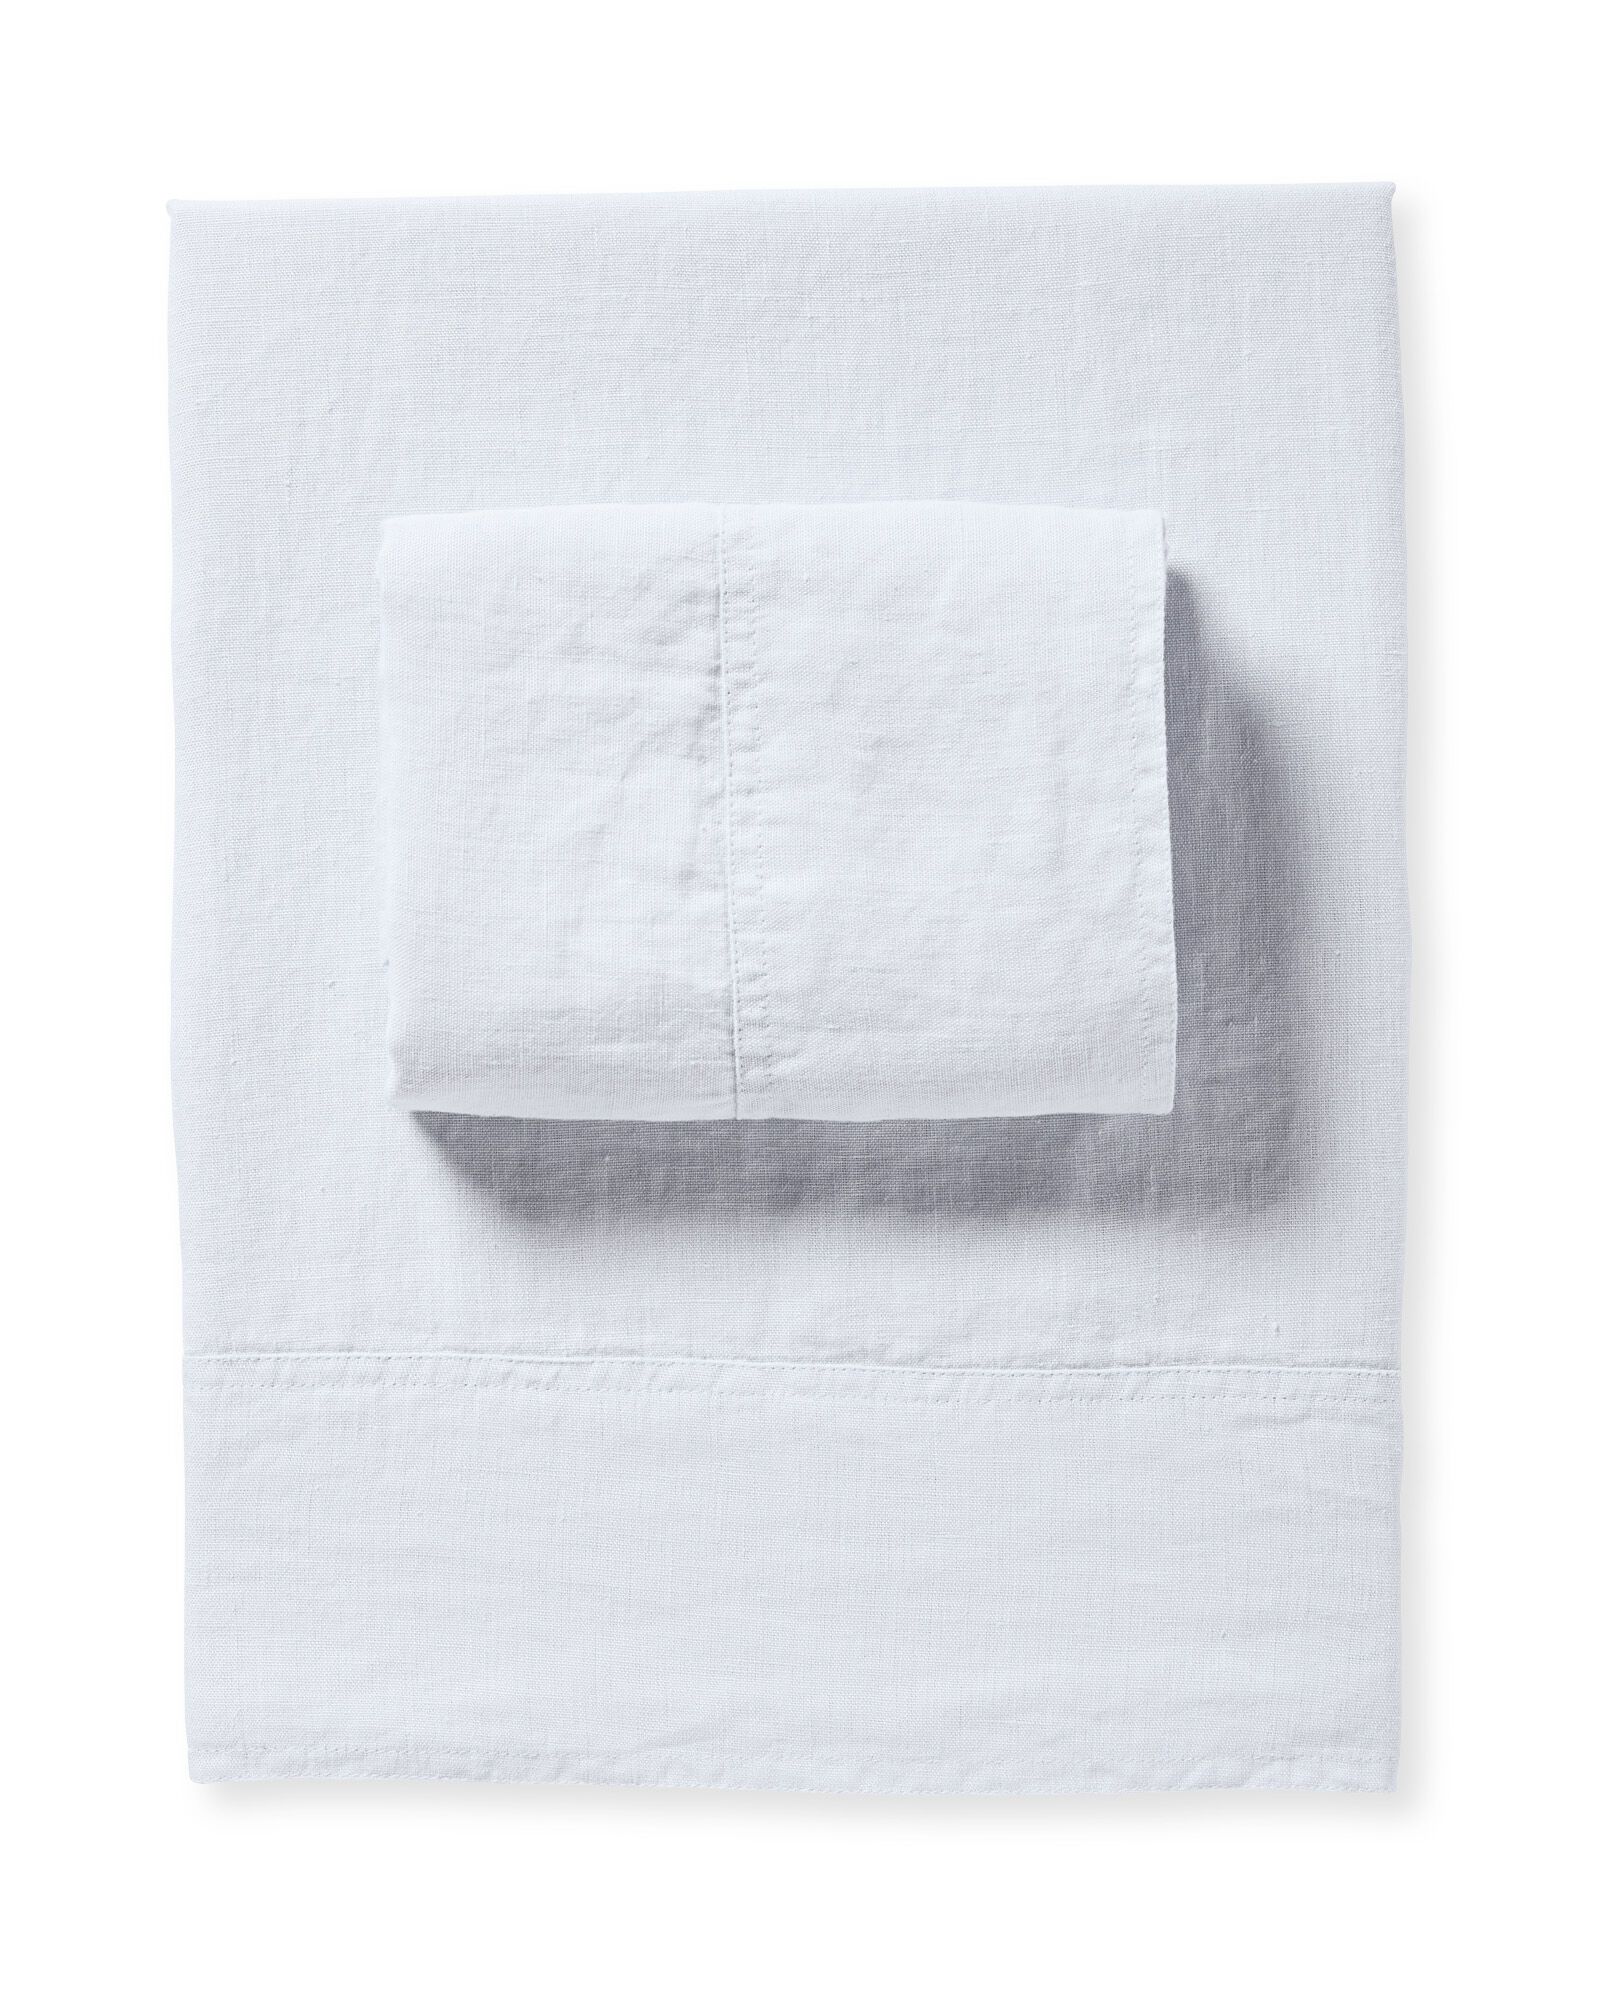 Positano Linen Sheet Set | Serena and Lily